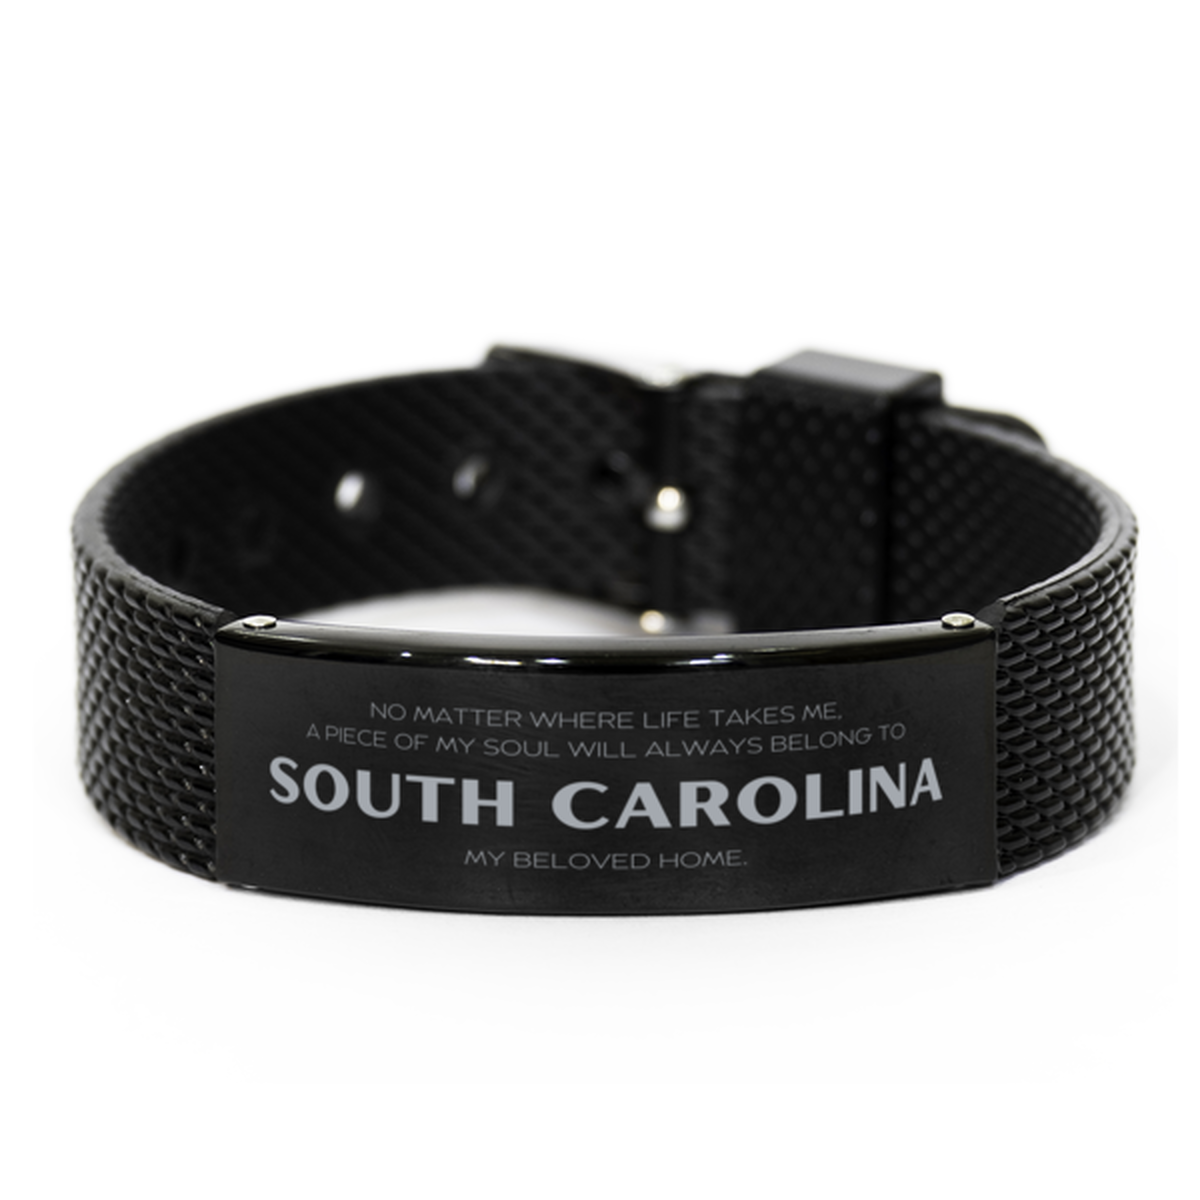 Love South Carolina State Gifts, My soul will always belong to South Carolina, Proud Black Shark Mesh Bracelet, Birthday Unique Gifts For South Carolina Men, Women, Friends